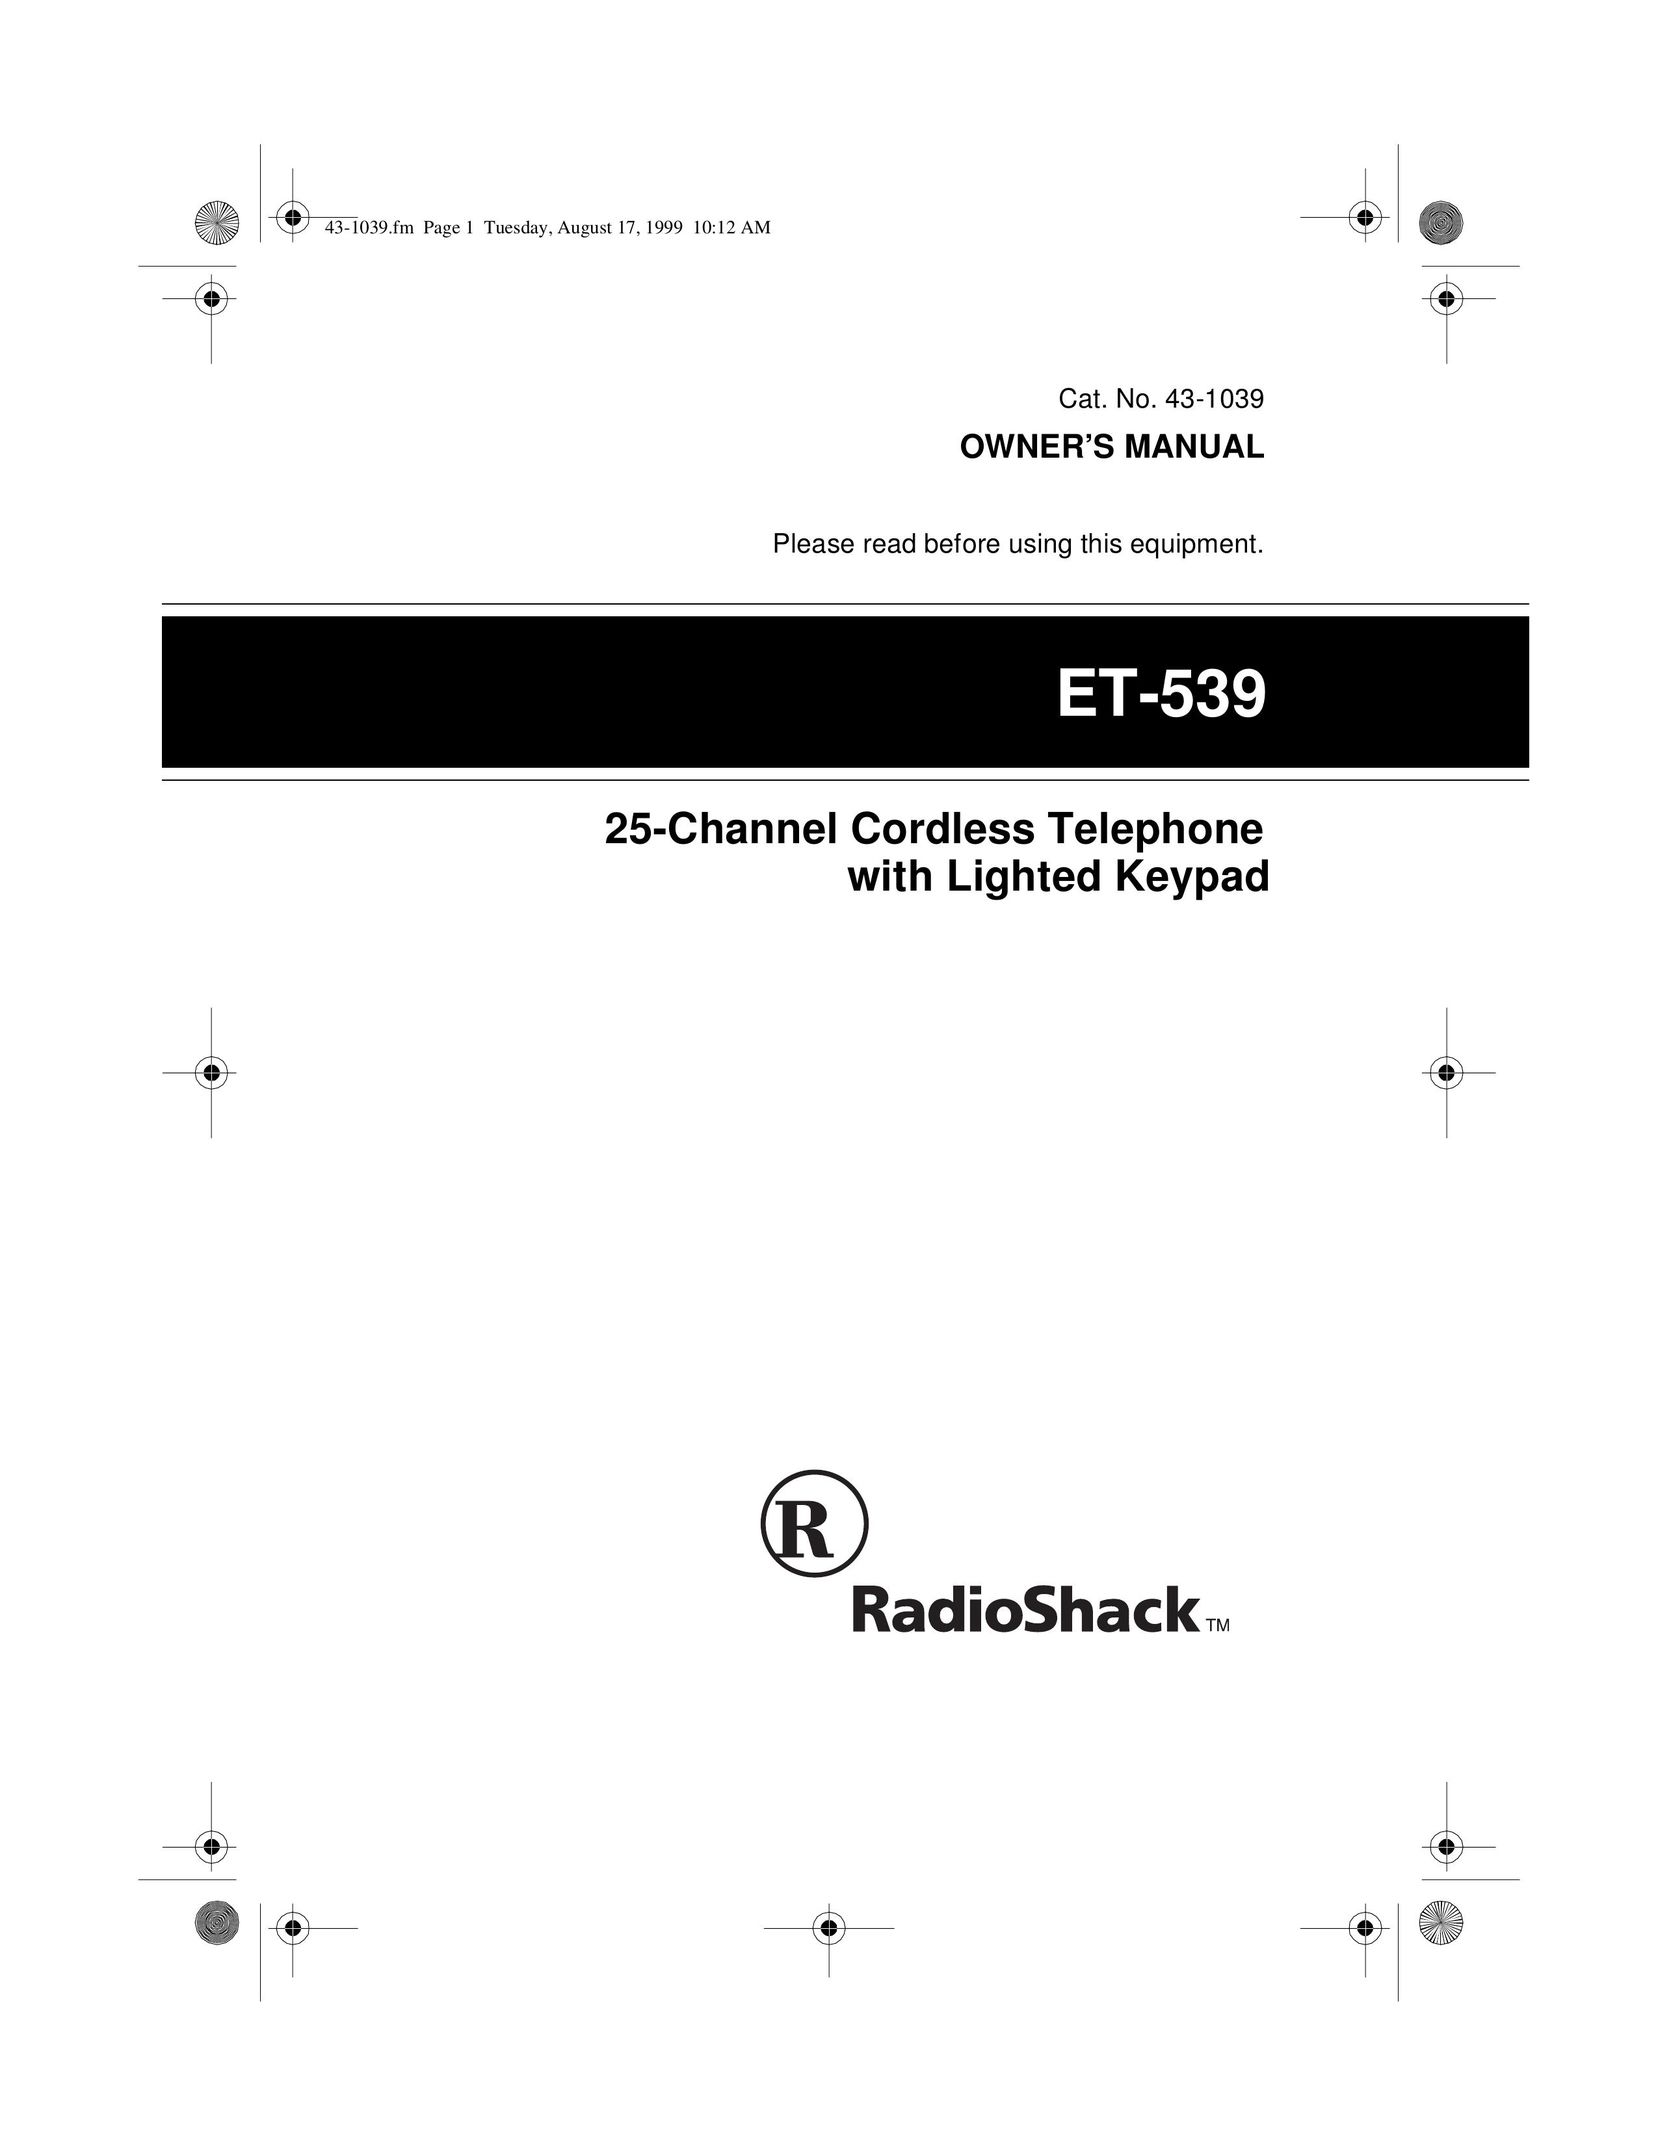 Tandy ET-539 Cordless Telephone User Manual